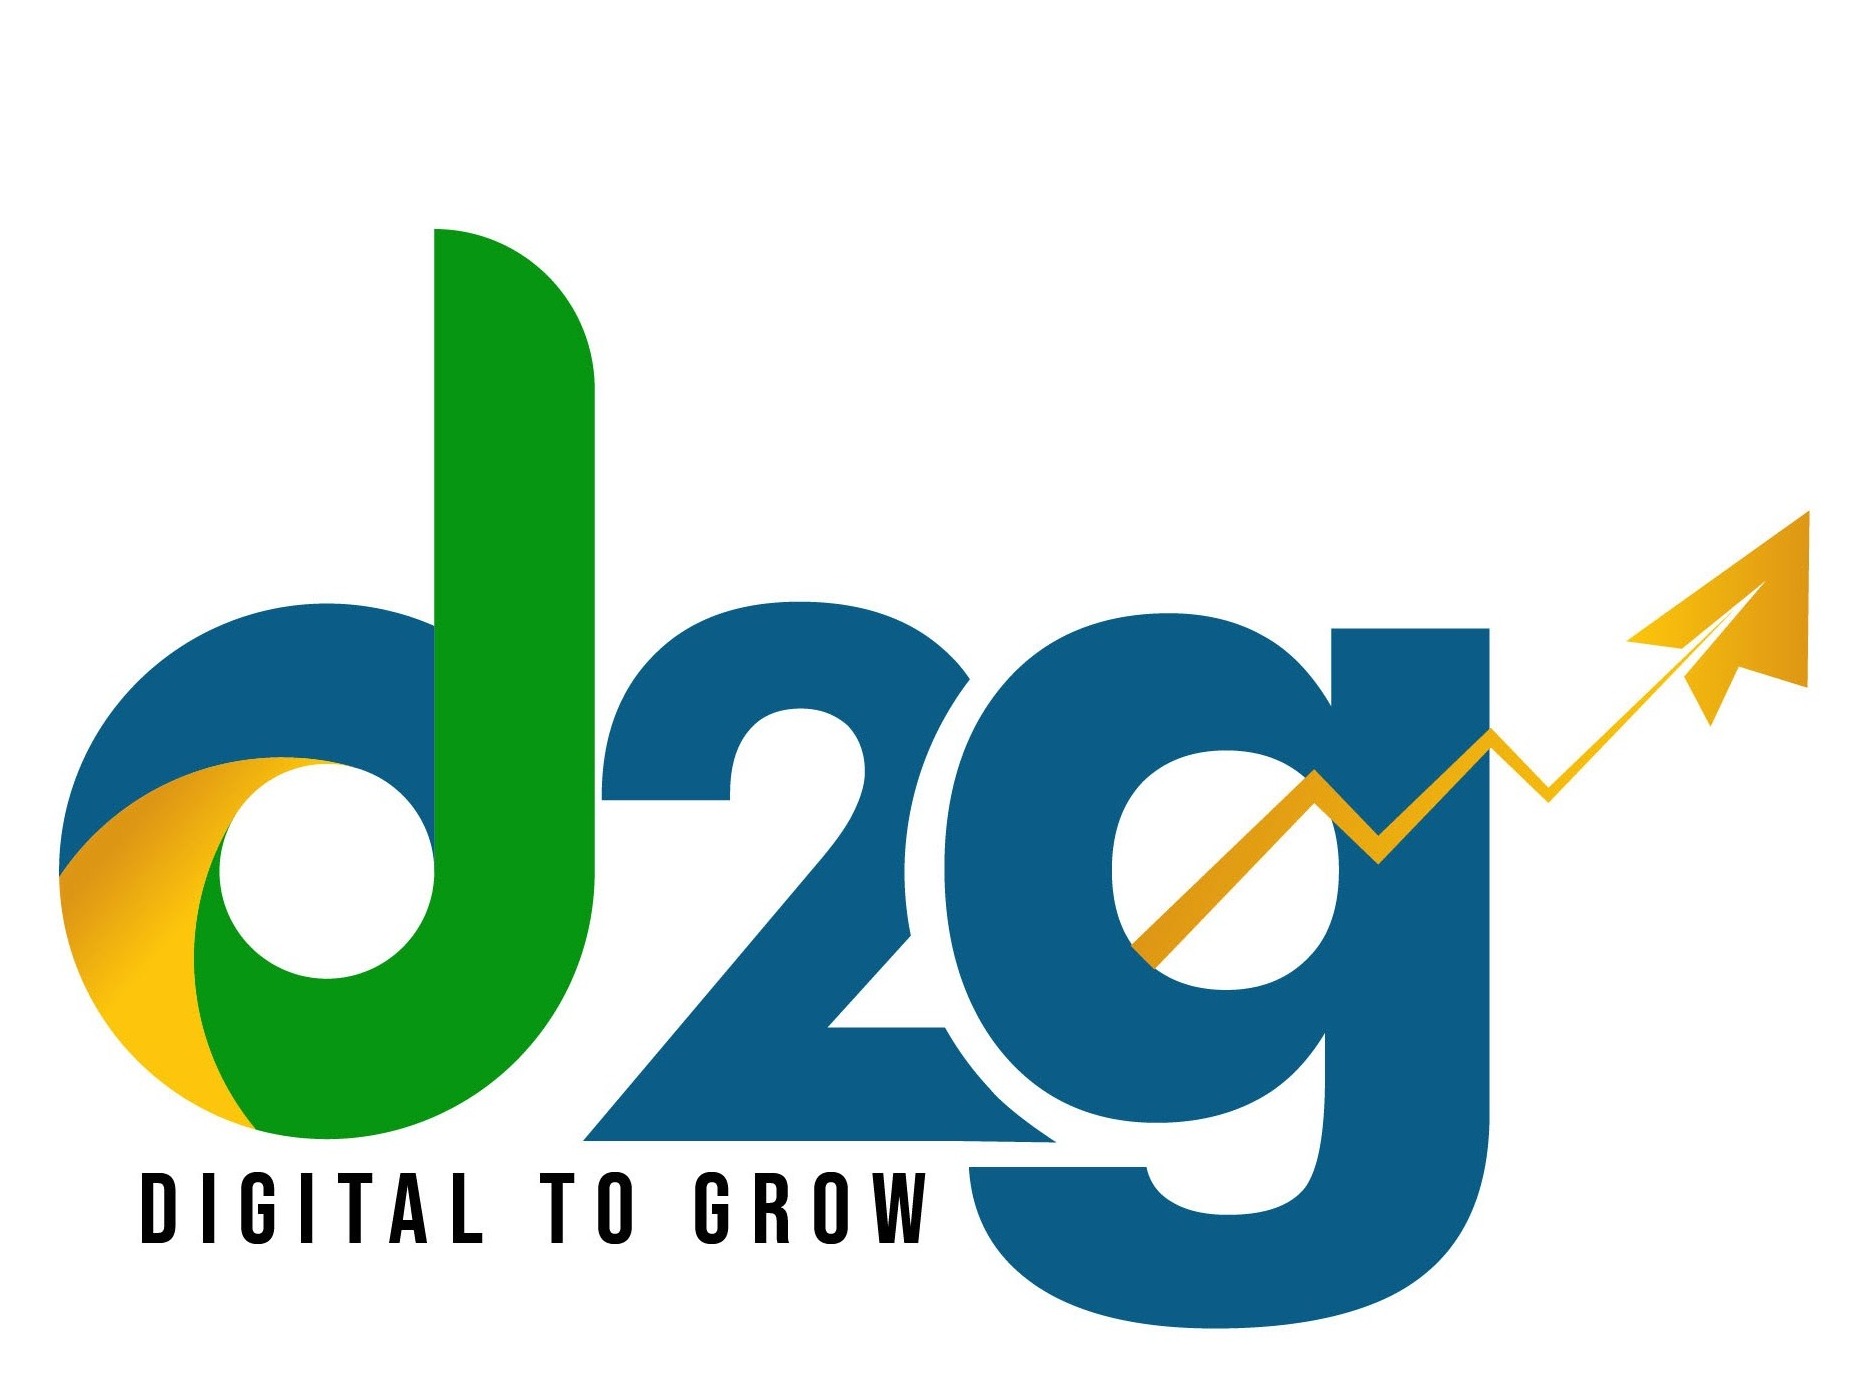 Digital 2 Grow